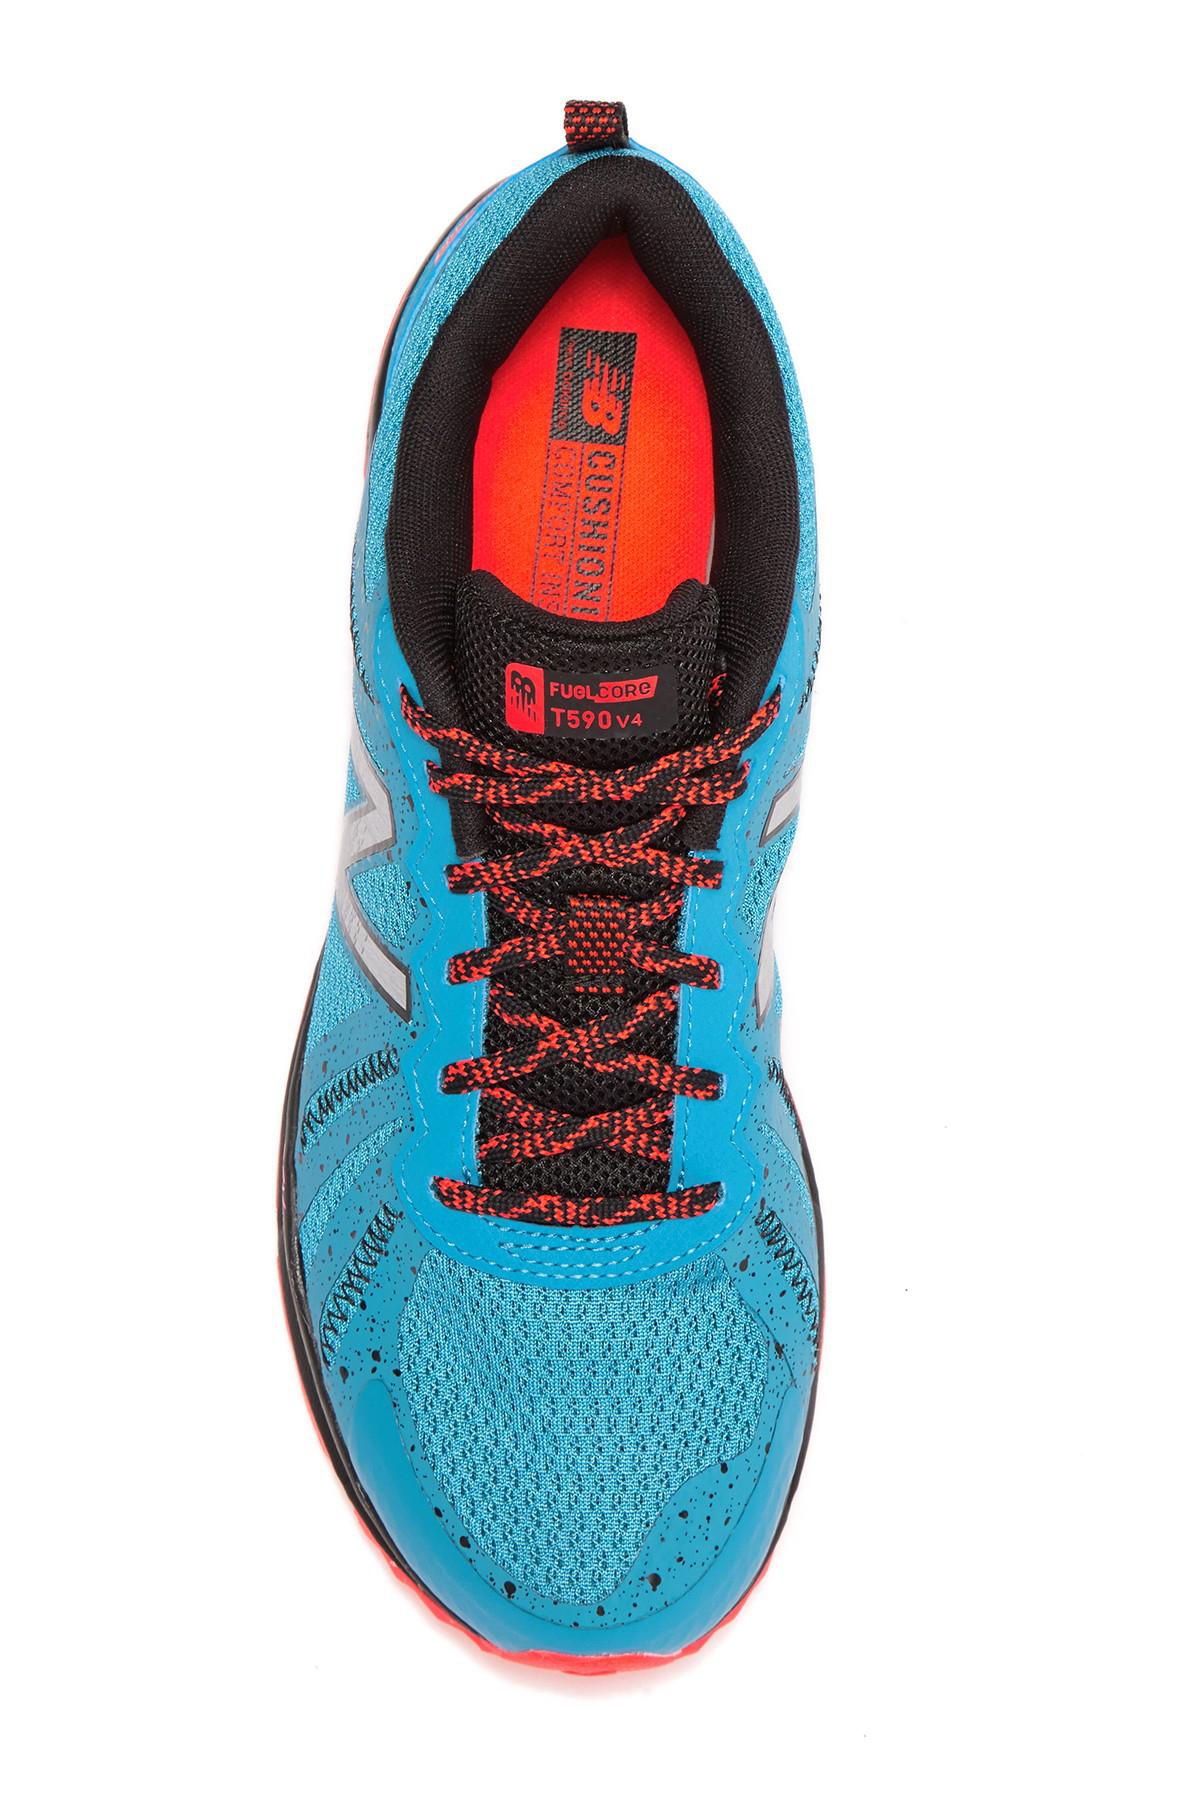 New Balance Fuel Core T590v4 Sneaker in Blue for Men - Lyst